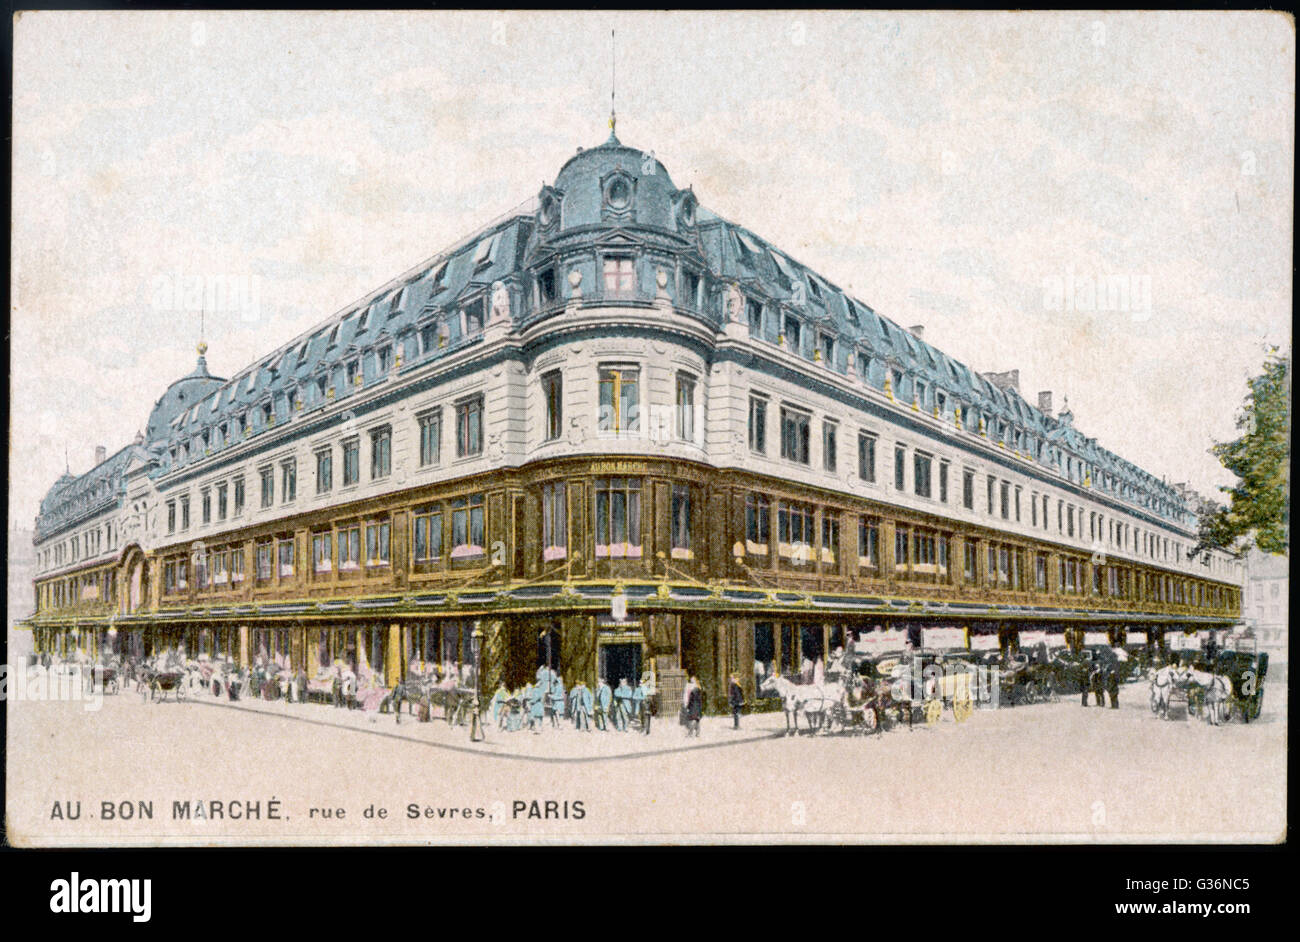 Vista esterna dell'Au Bon Marche department store in rue de Sevres, Parigi, Francia. Data: circa 1910 Foto Stock